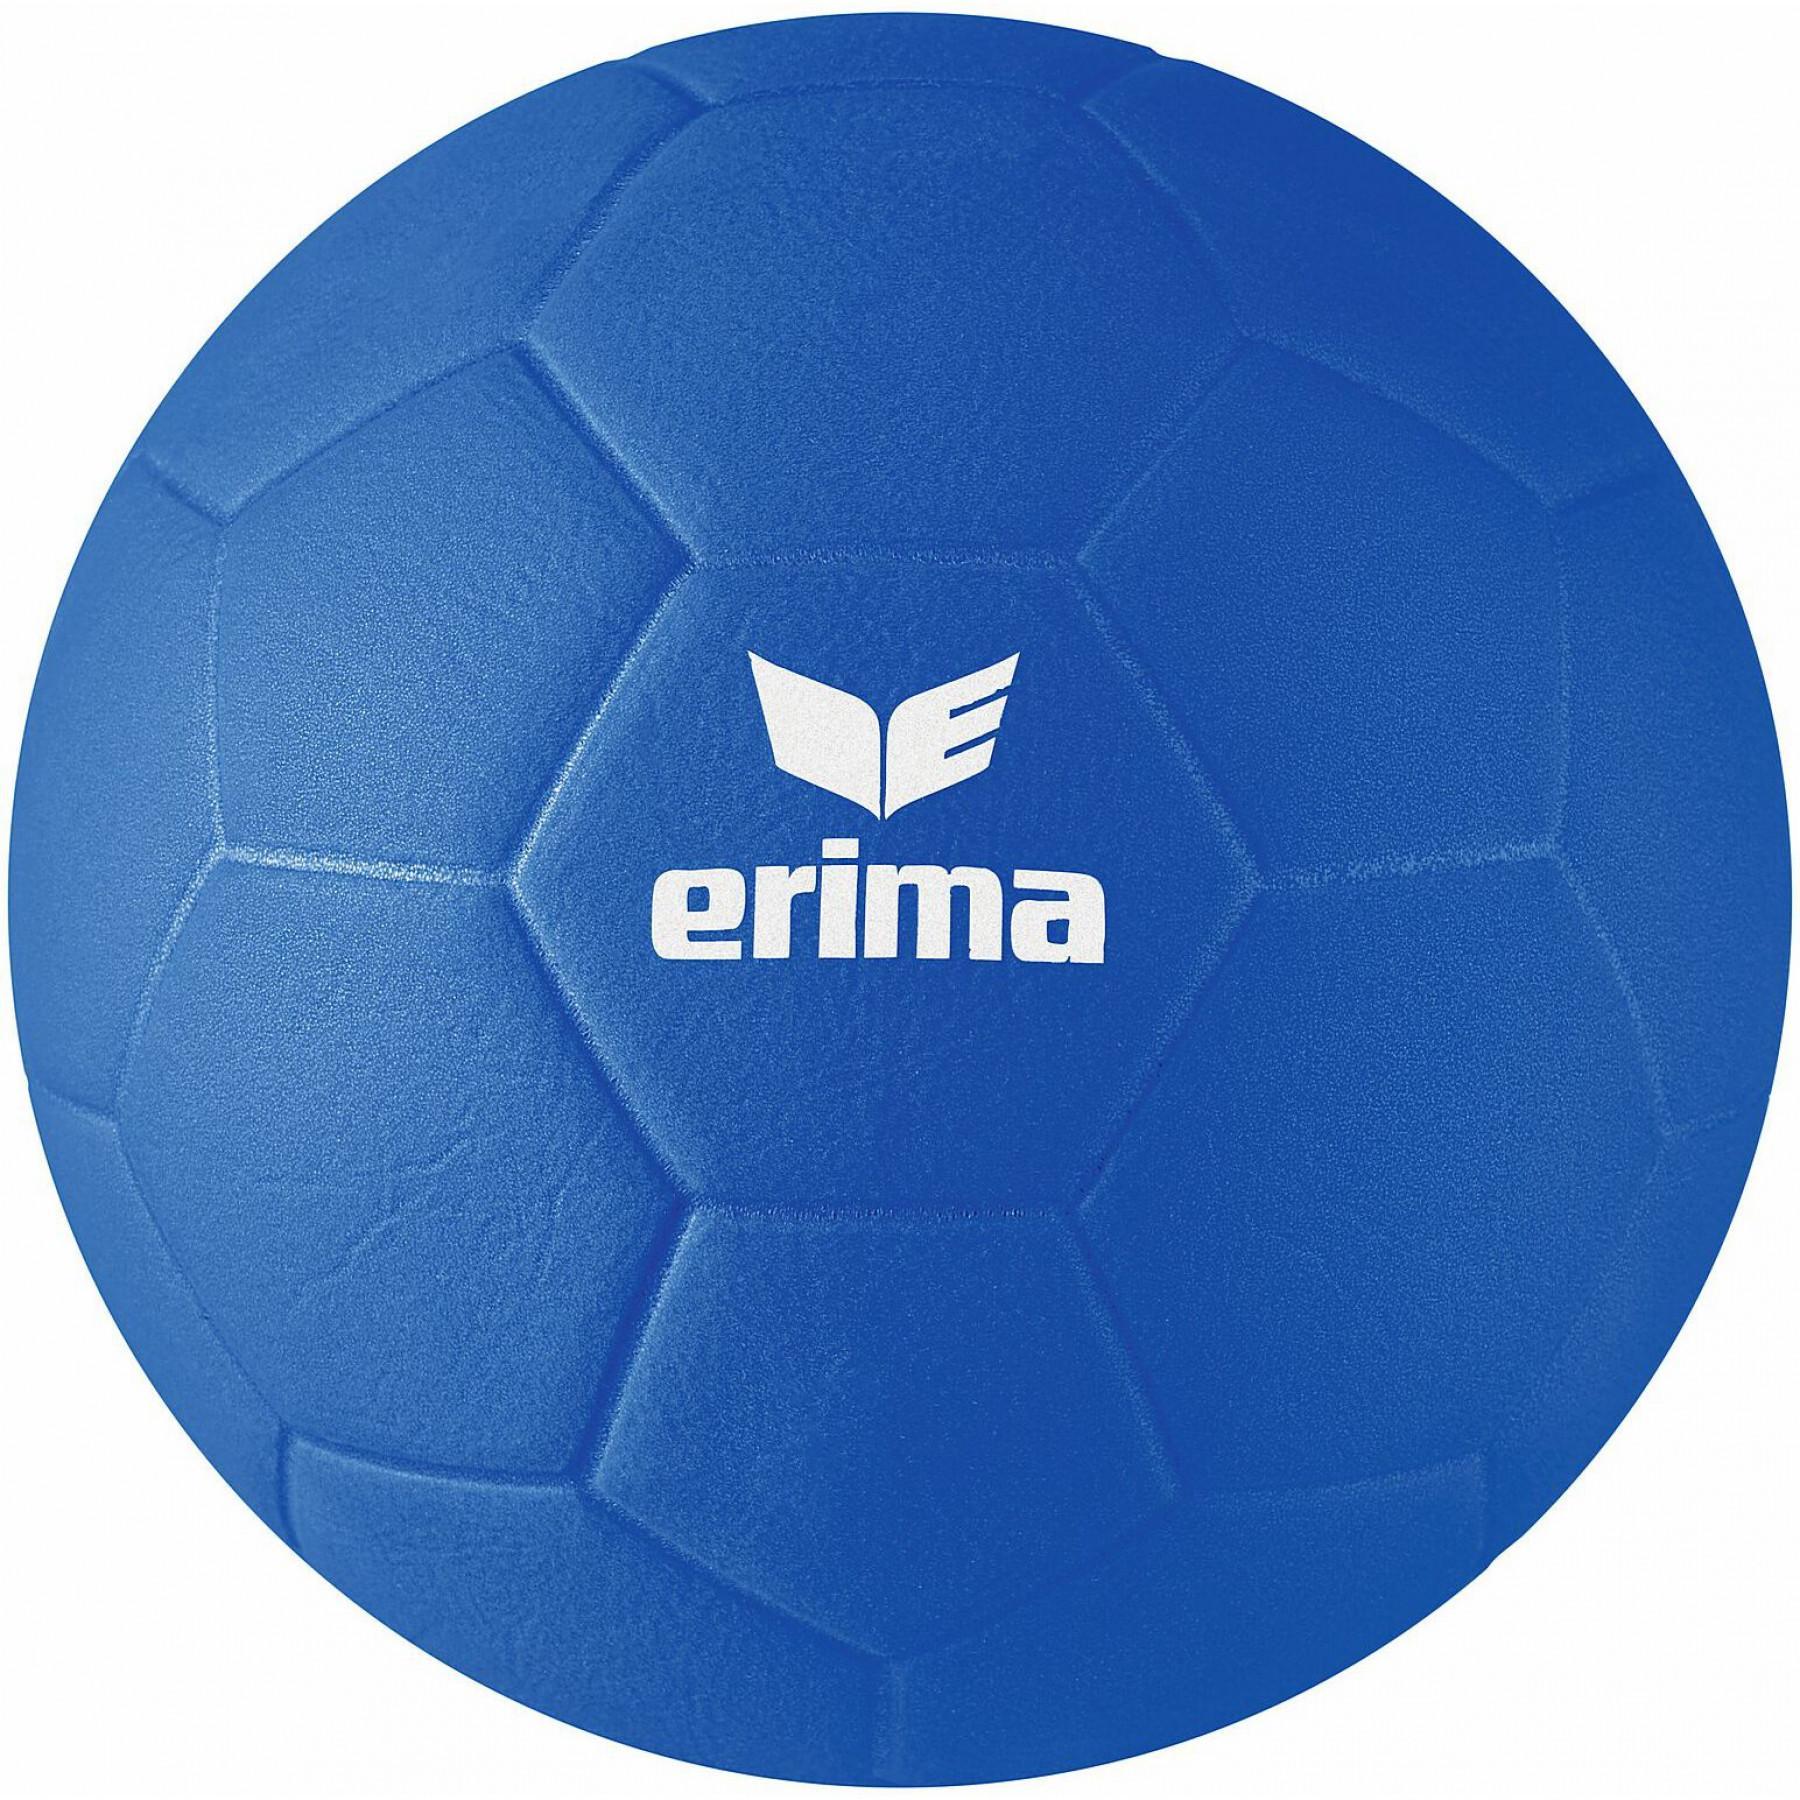 Lot von 5 Beach-Handballbällen Erima [Taille3]